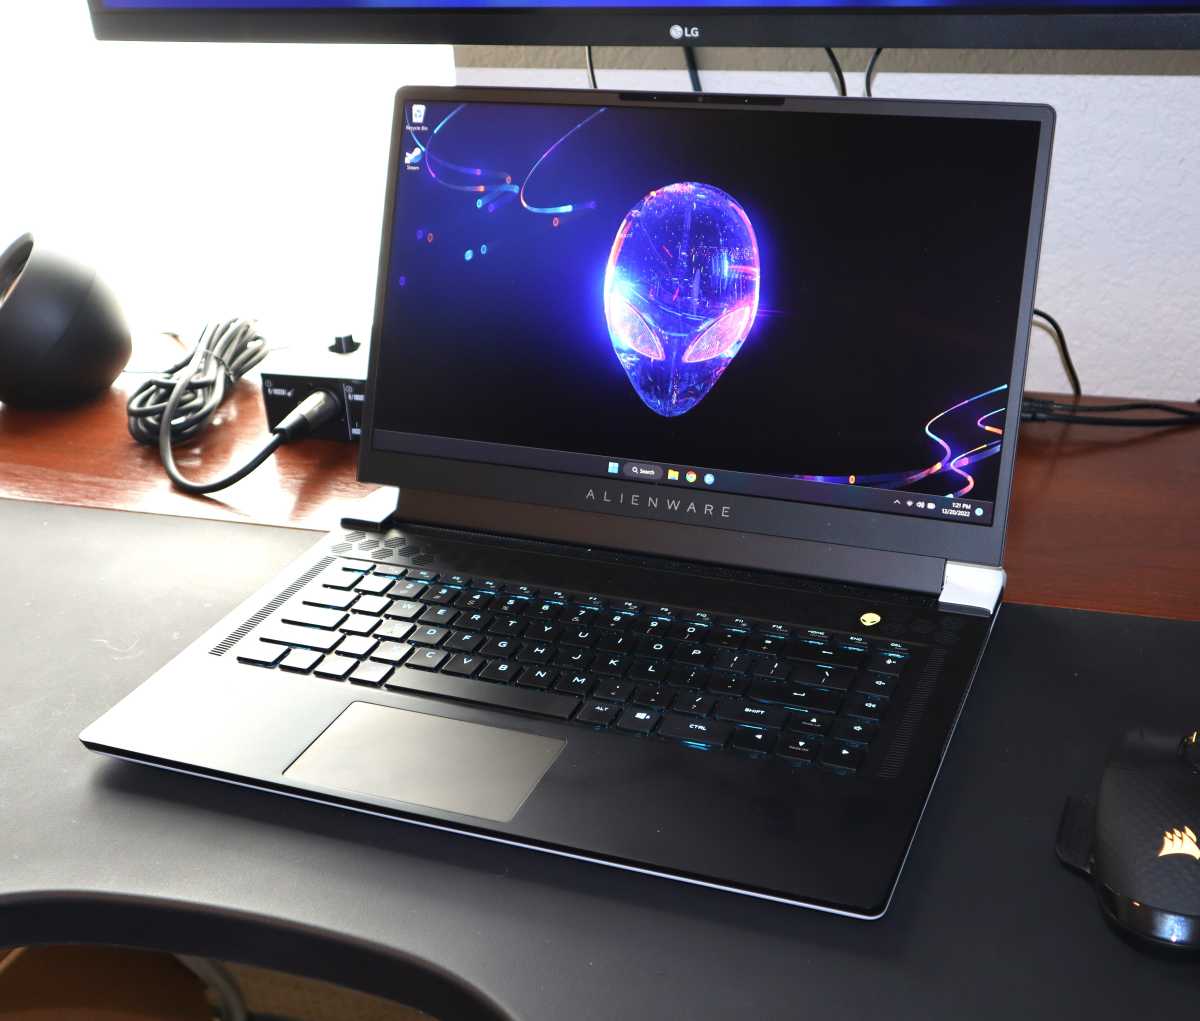 Alienware X15 laptop on desk.